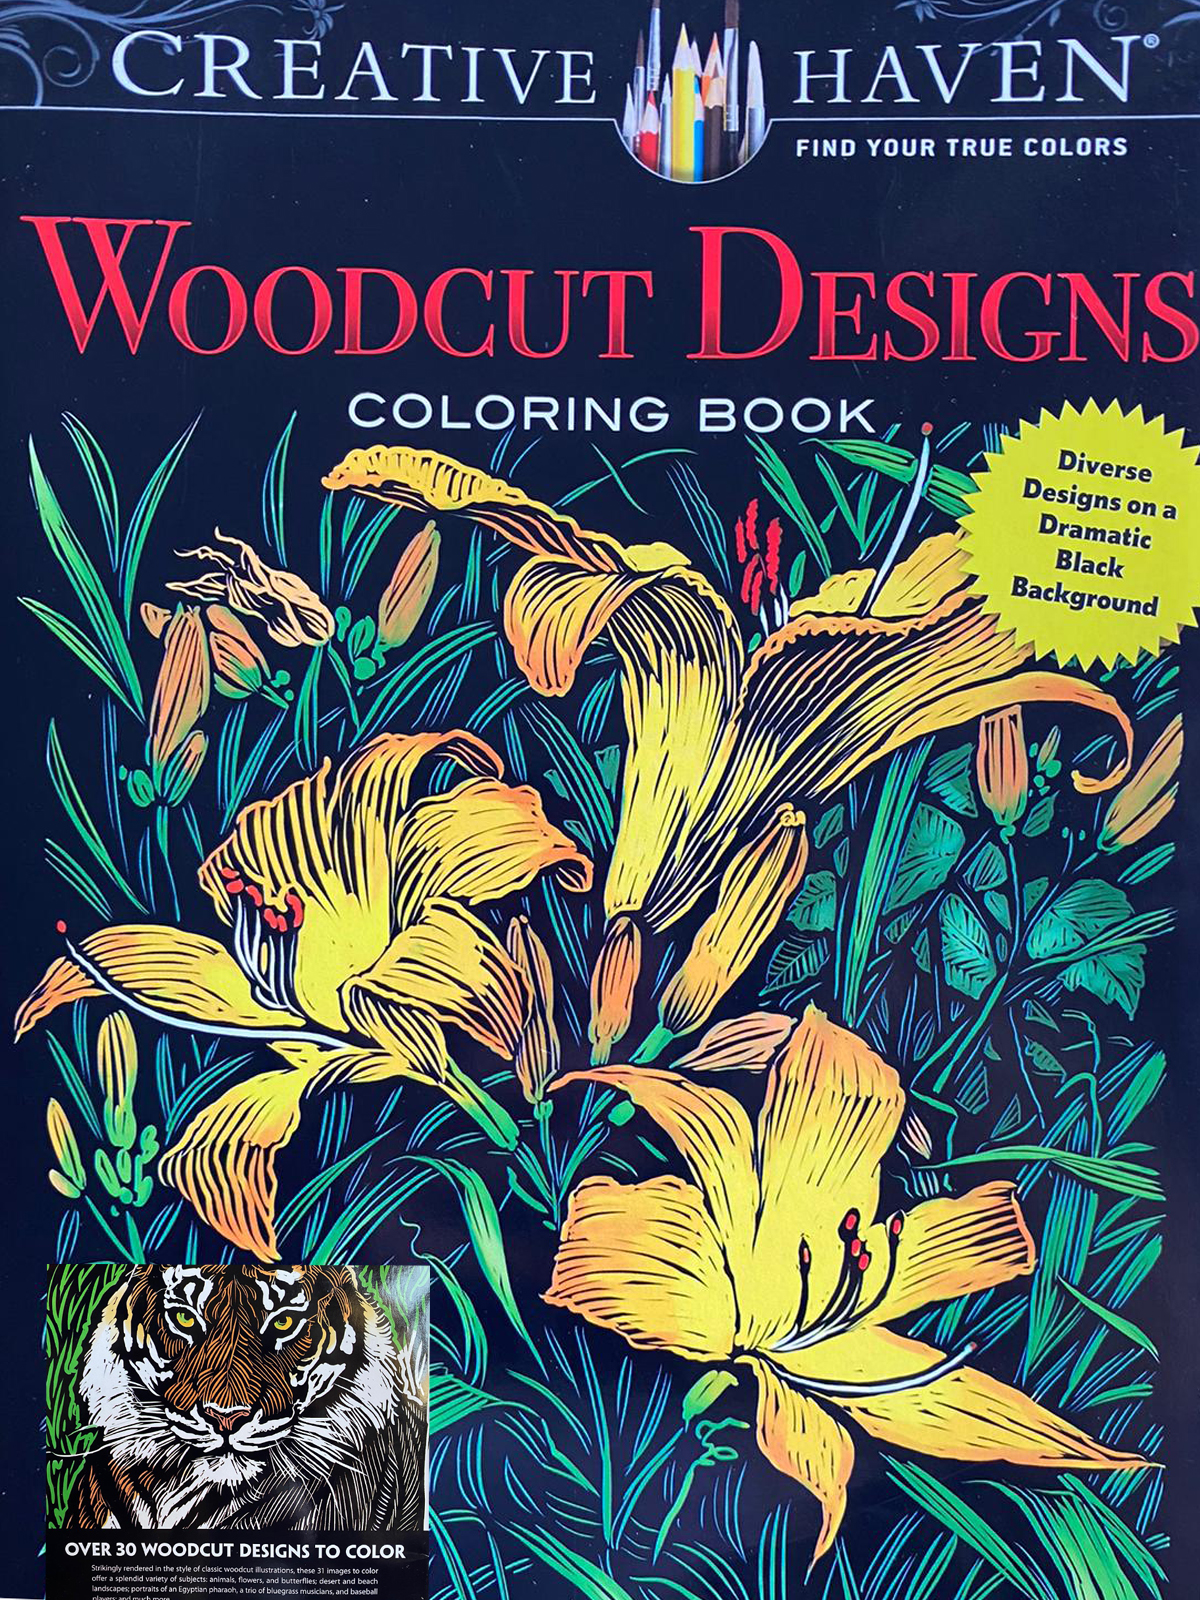 Creative Haven - Woodcut Designs Coloring Book